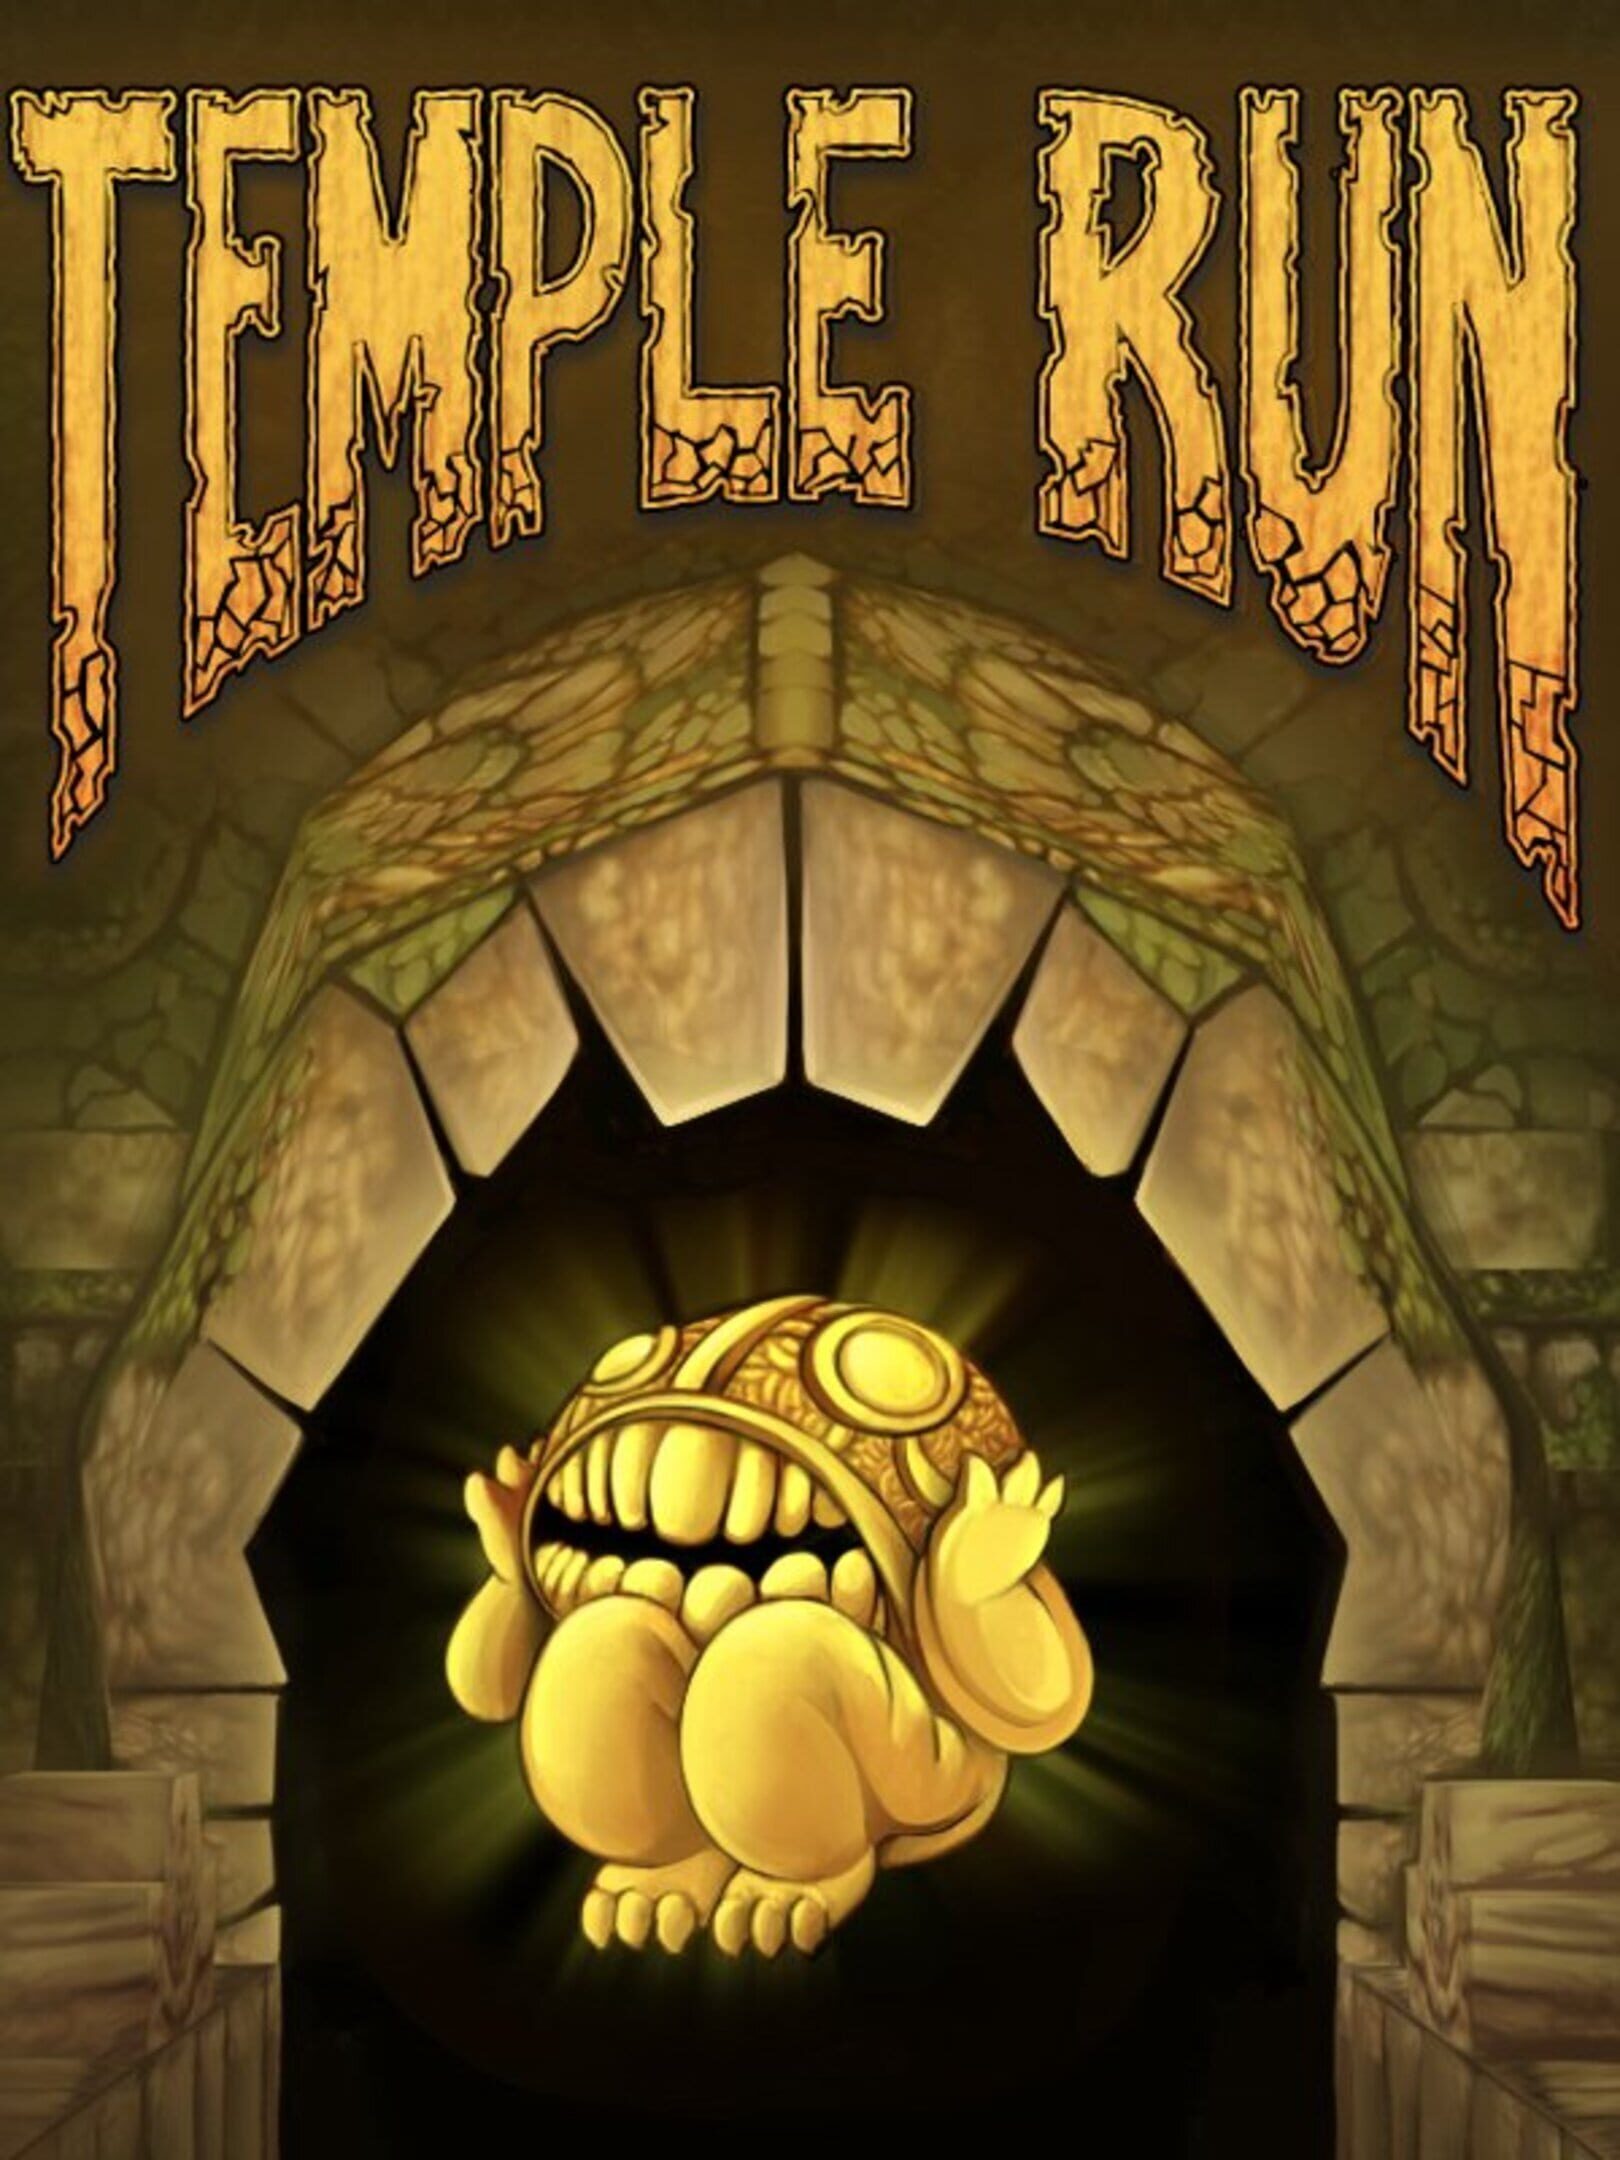 Temple Run 2 Arcade Ticket Game